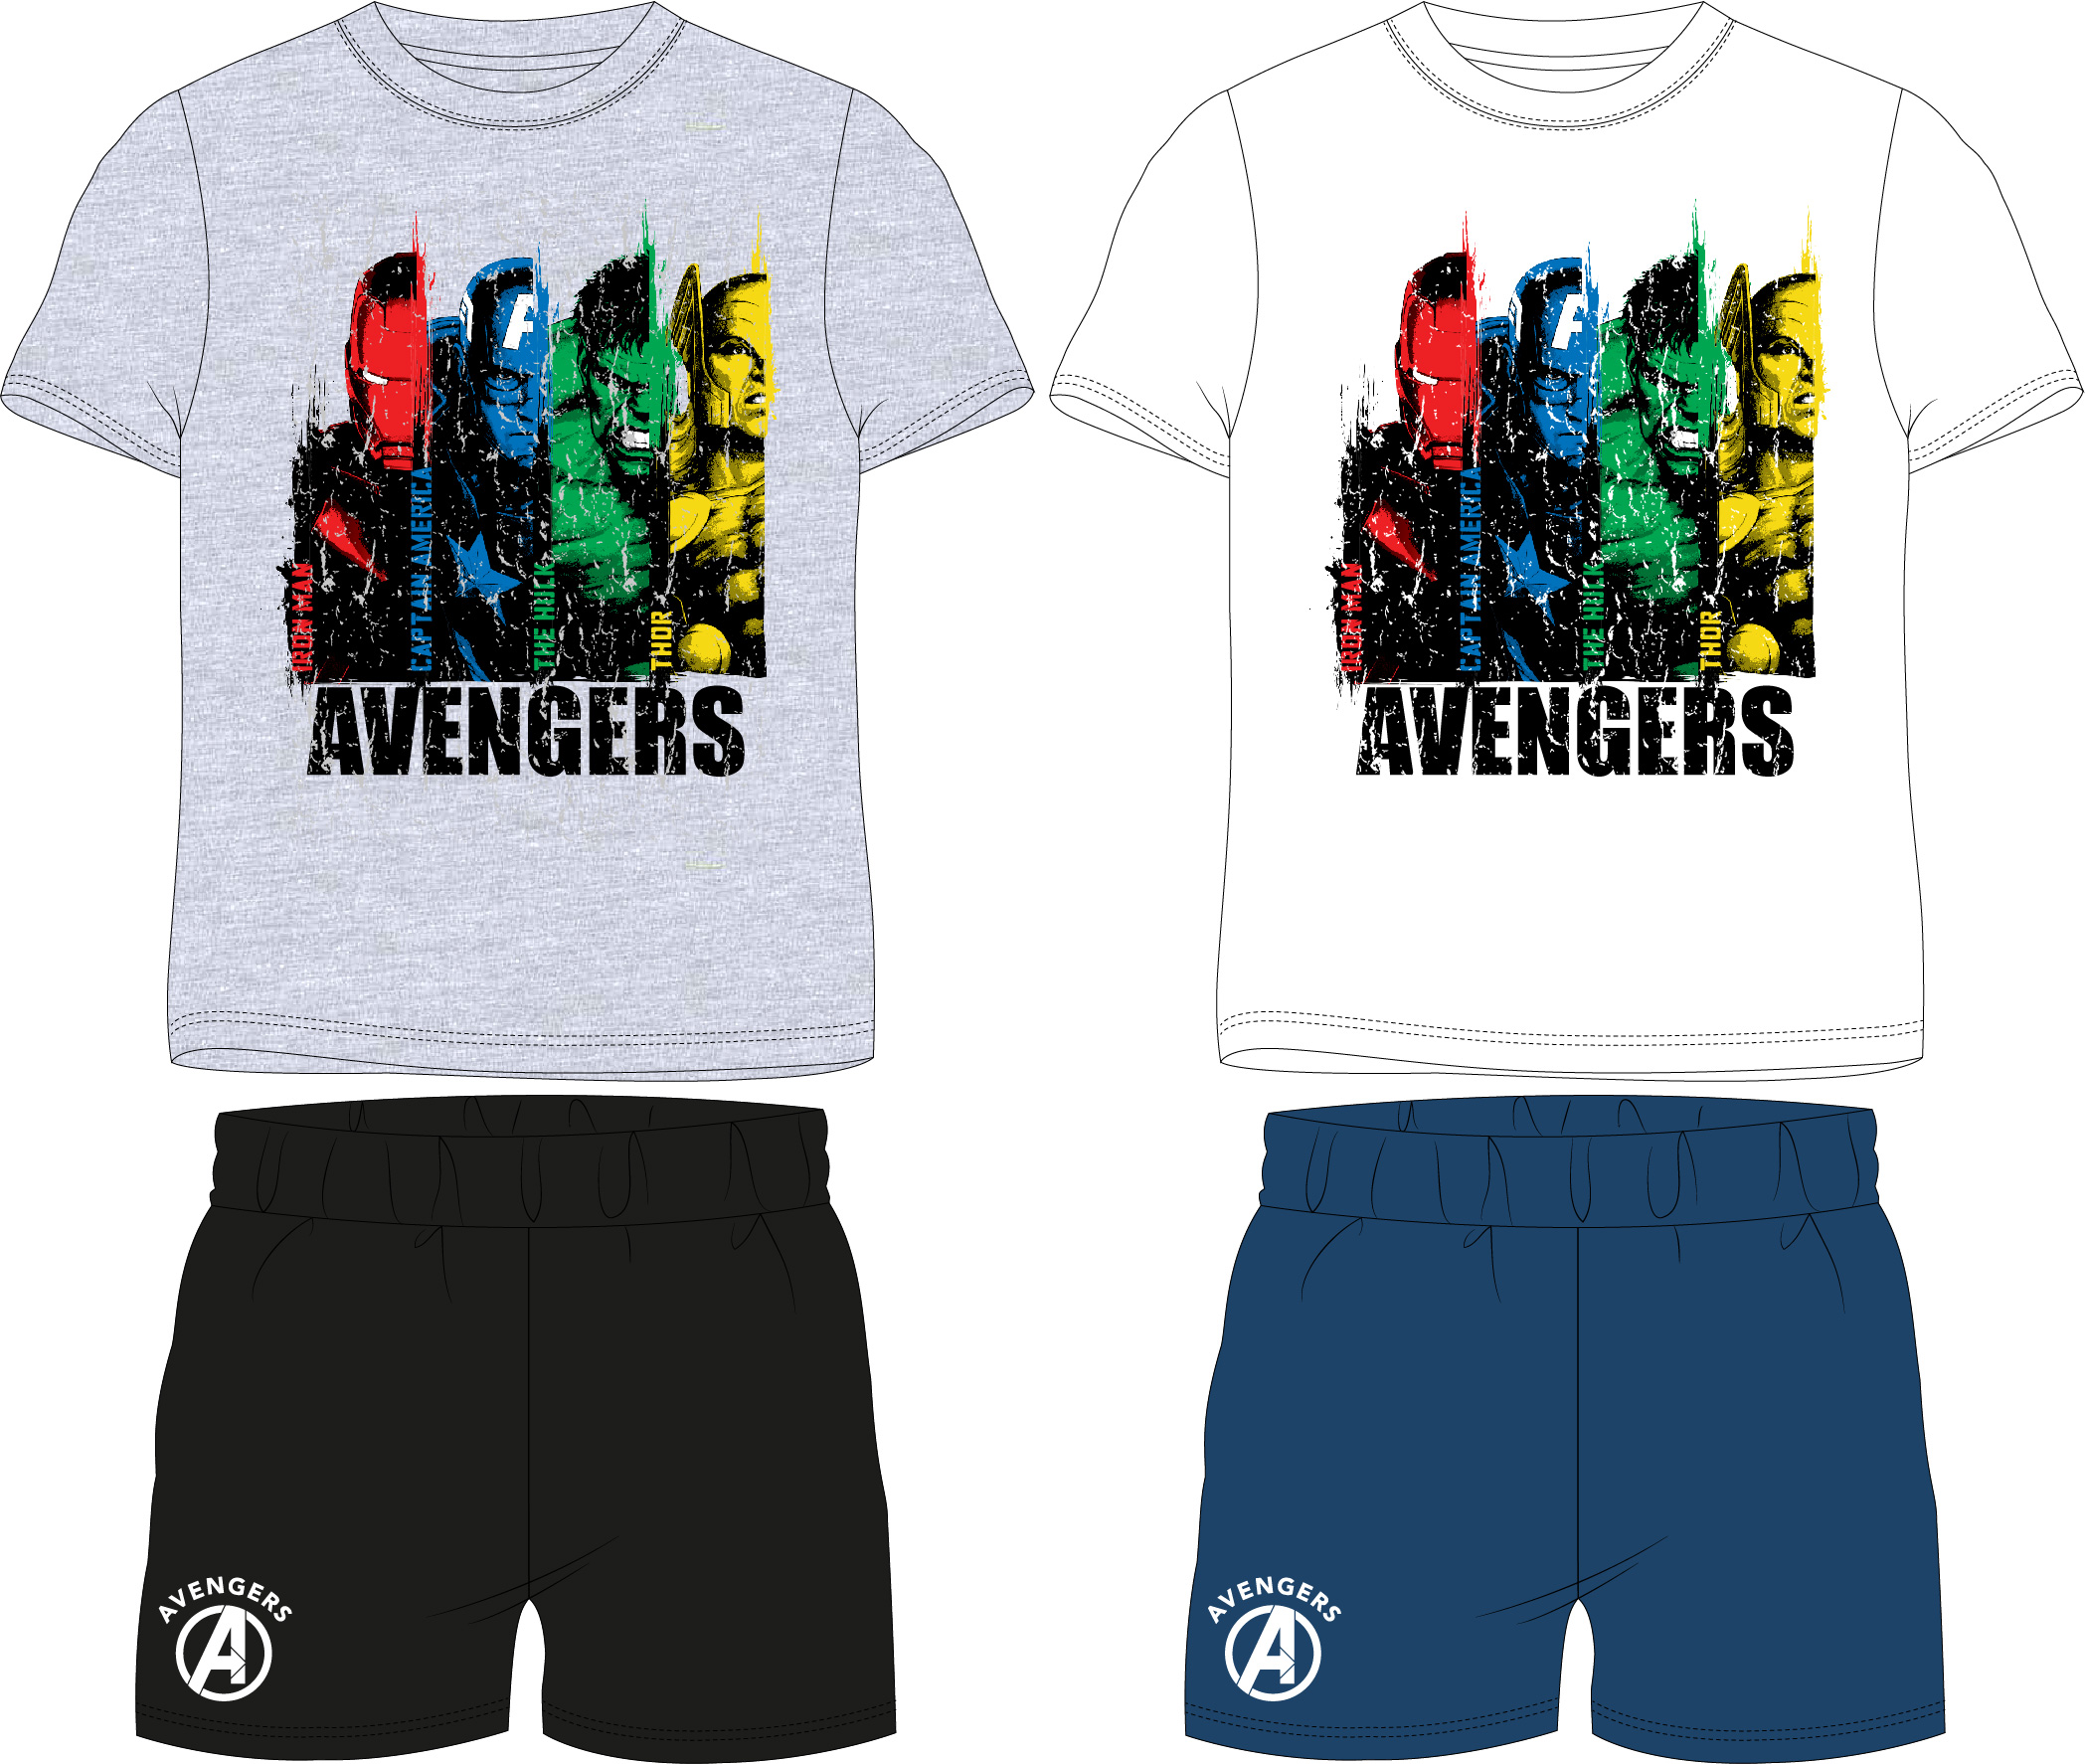 Avangers - licence Chlapecké pyžamo - Avengers 5204438, bílá / černá Barva: Bílá, Velikost: 146-152